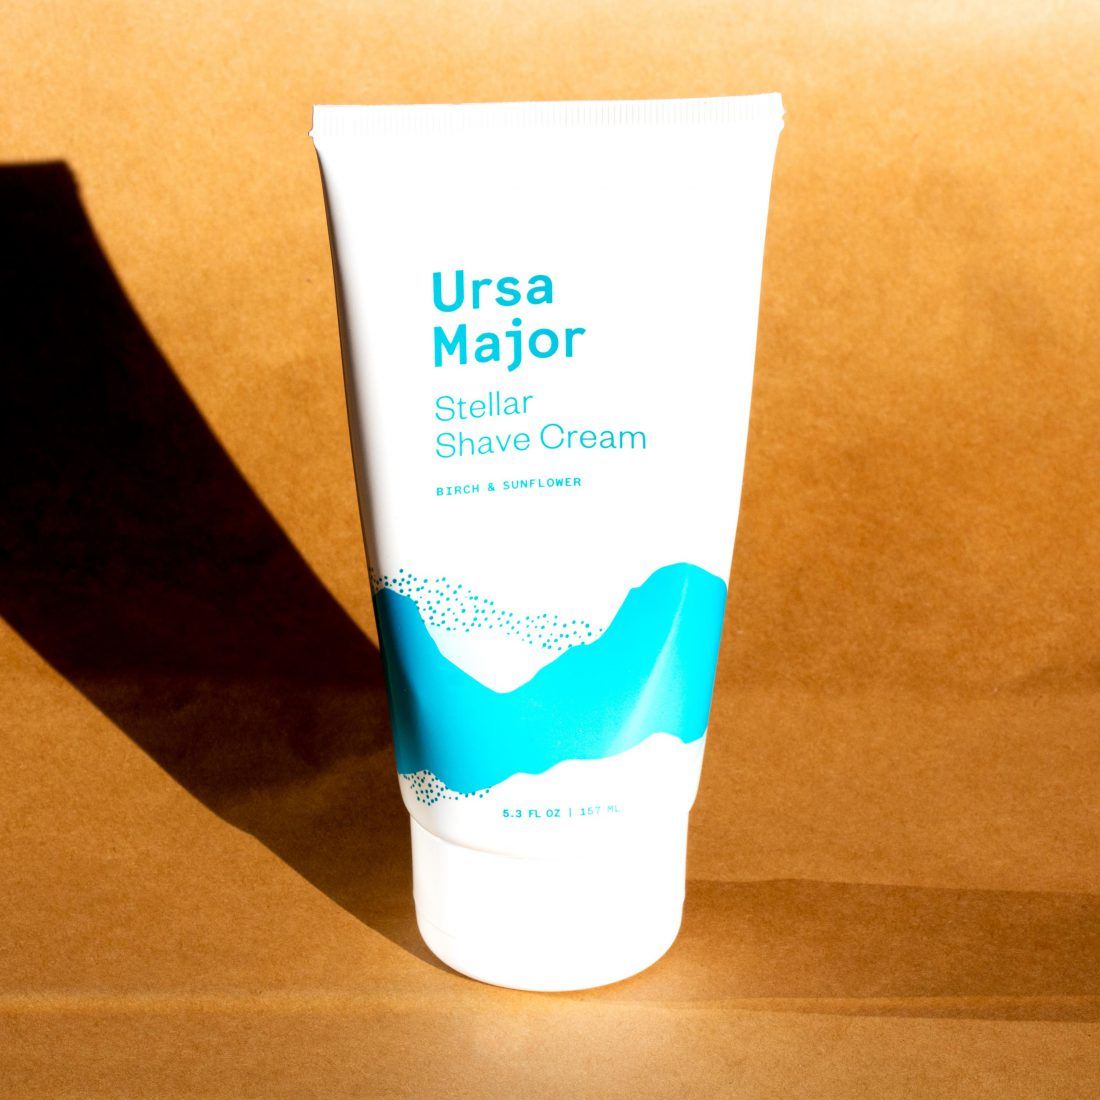 Ursa Major Shave Cream